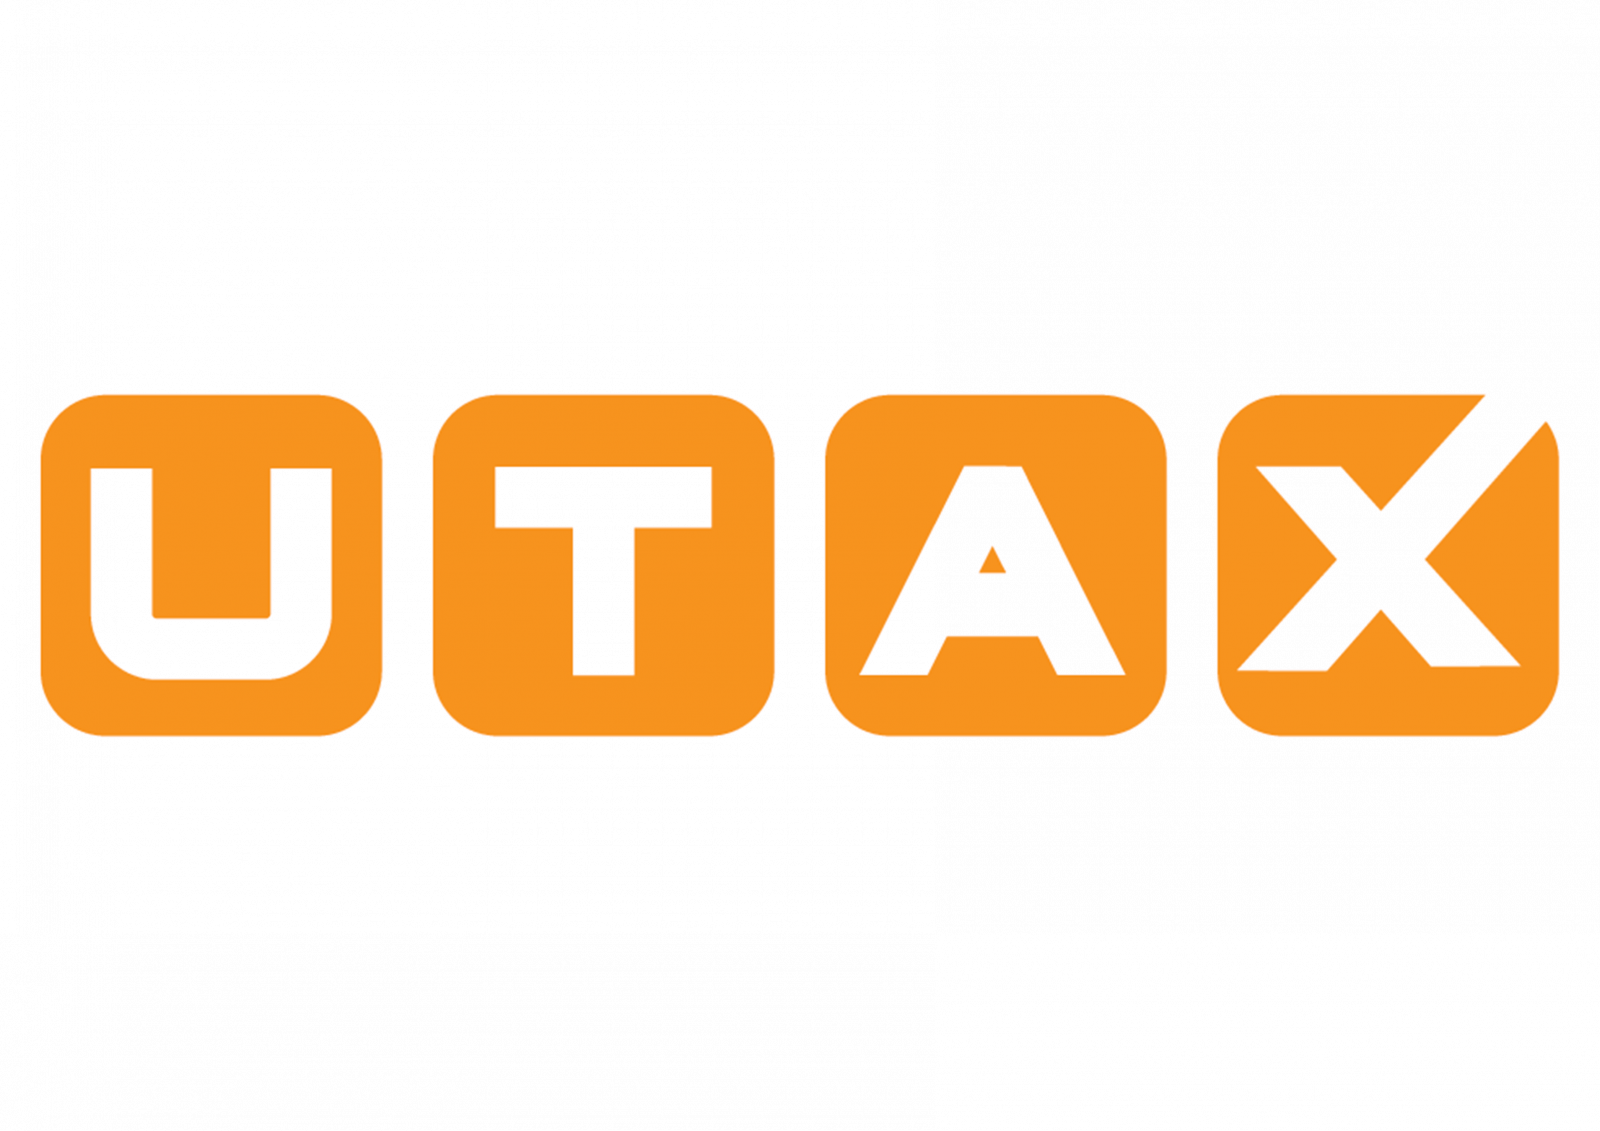 Utax